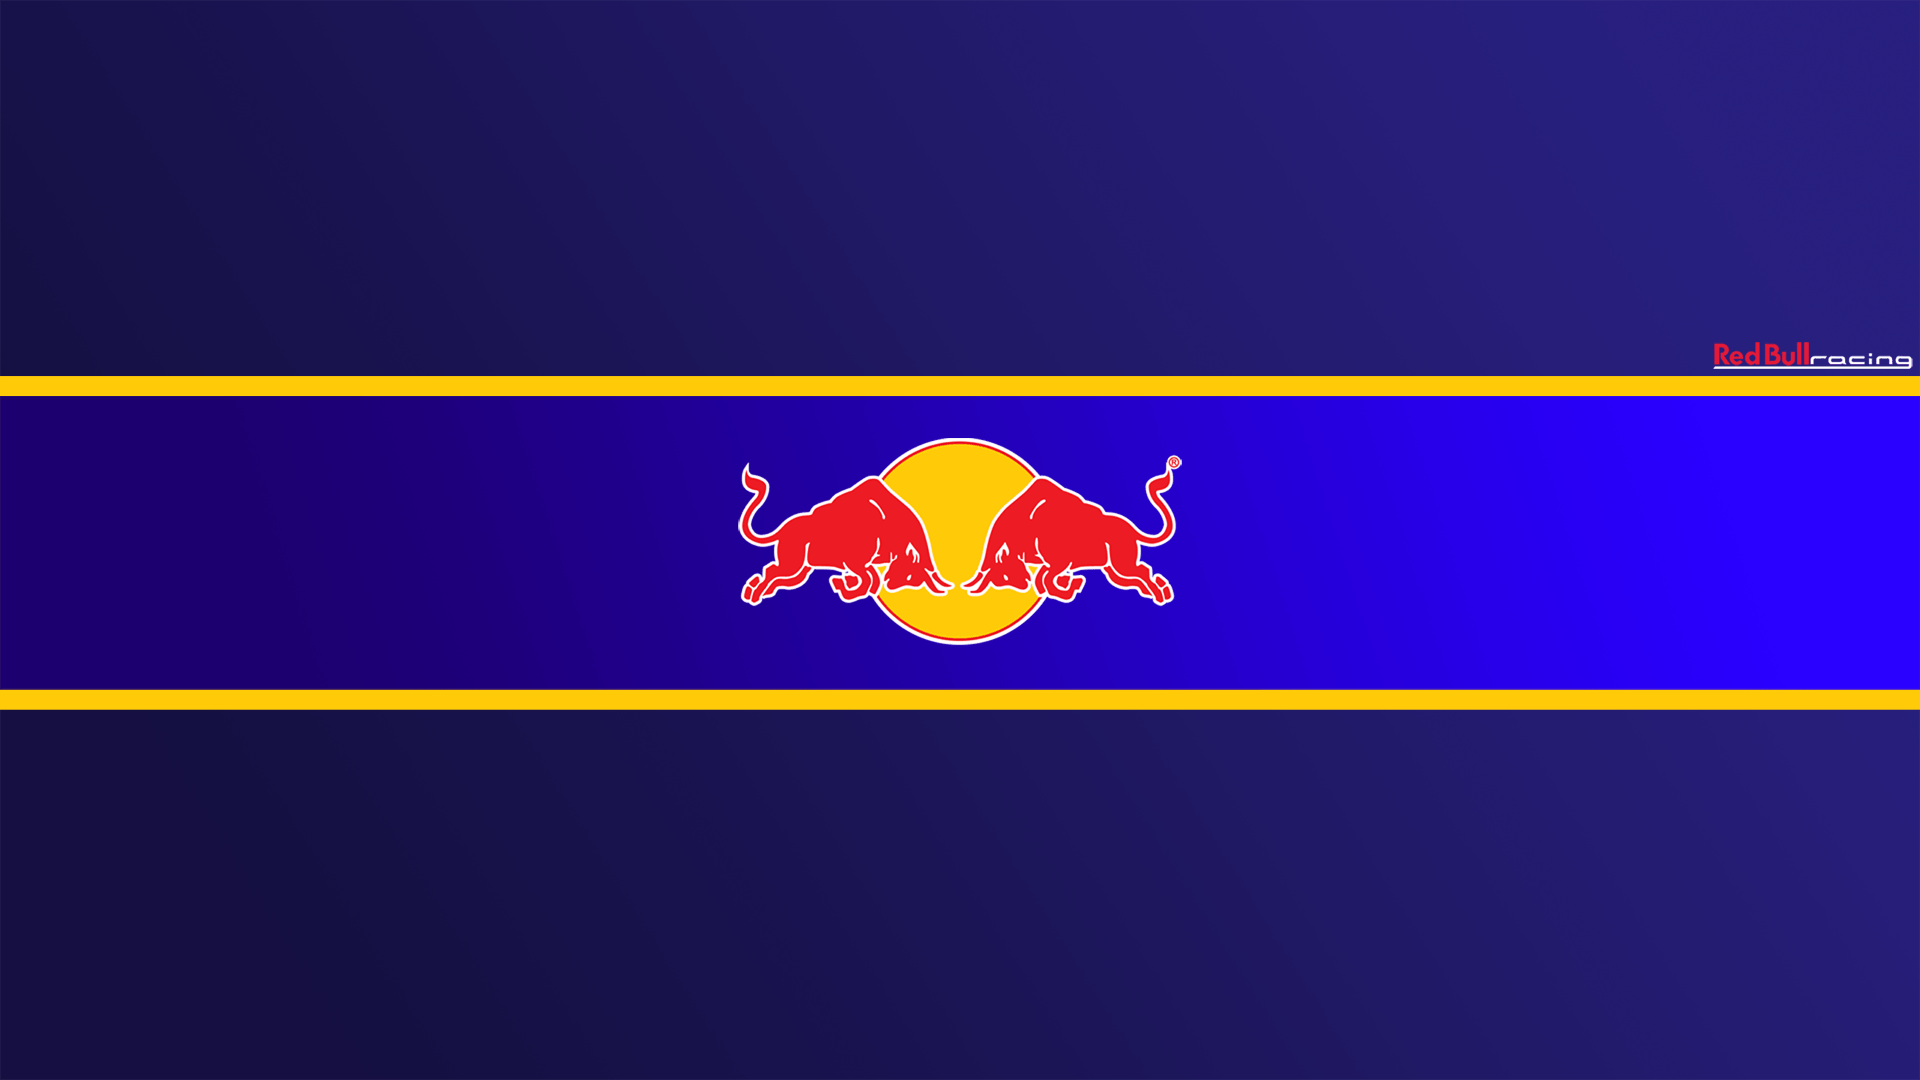 Wallpaper.wiki Red Bull Logo Photo PIC WPD005161